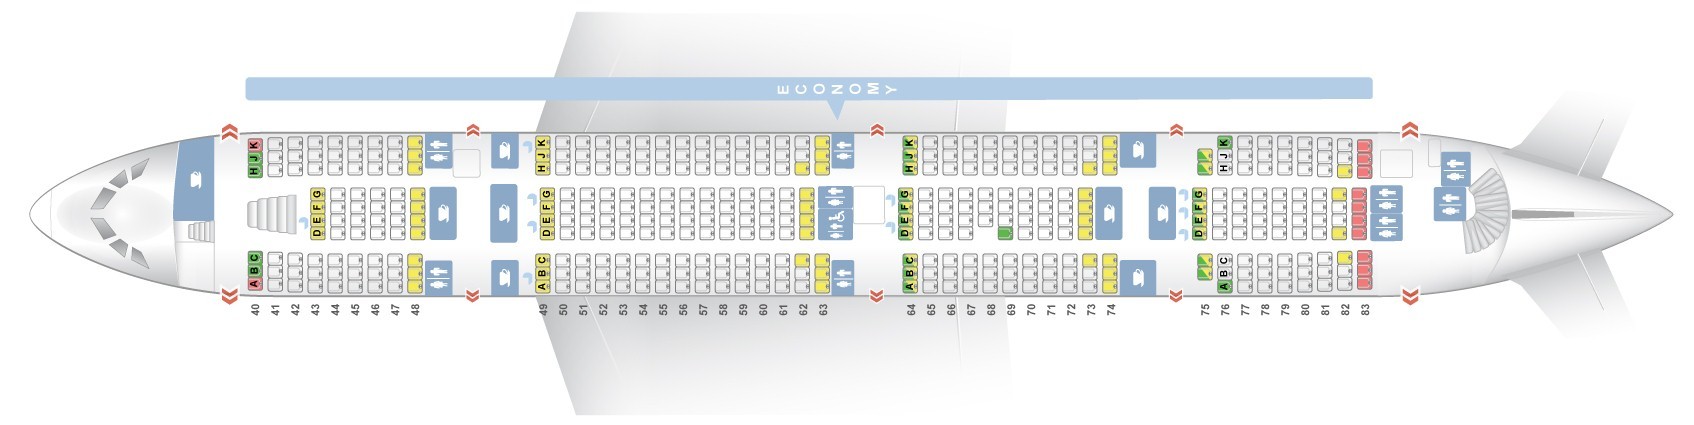 Etihad A380 Seating Chart